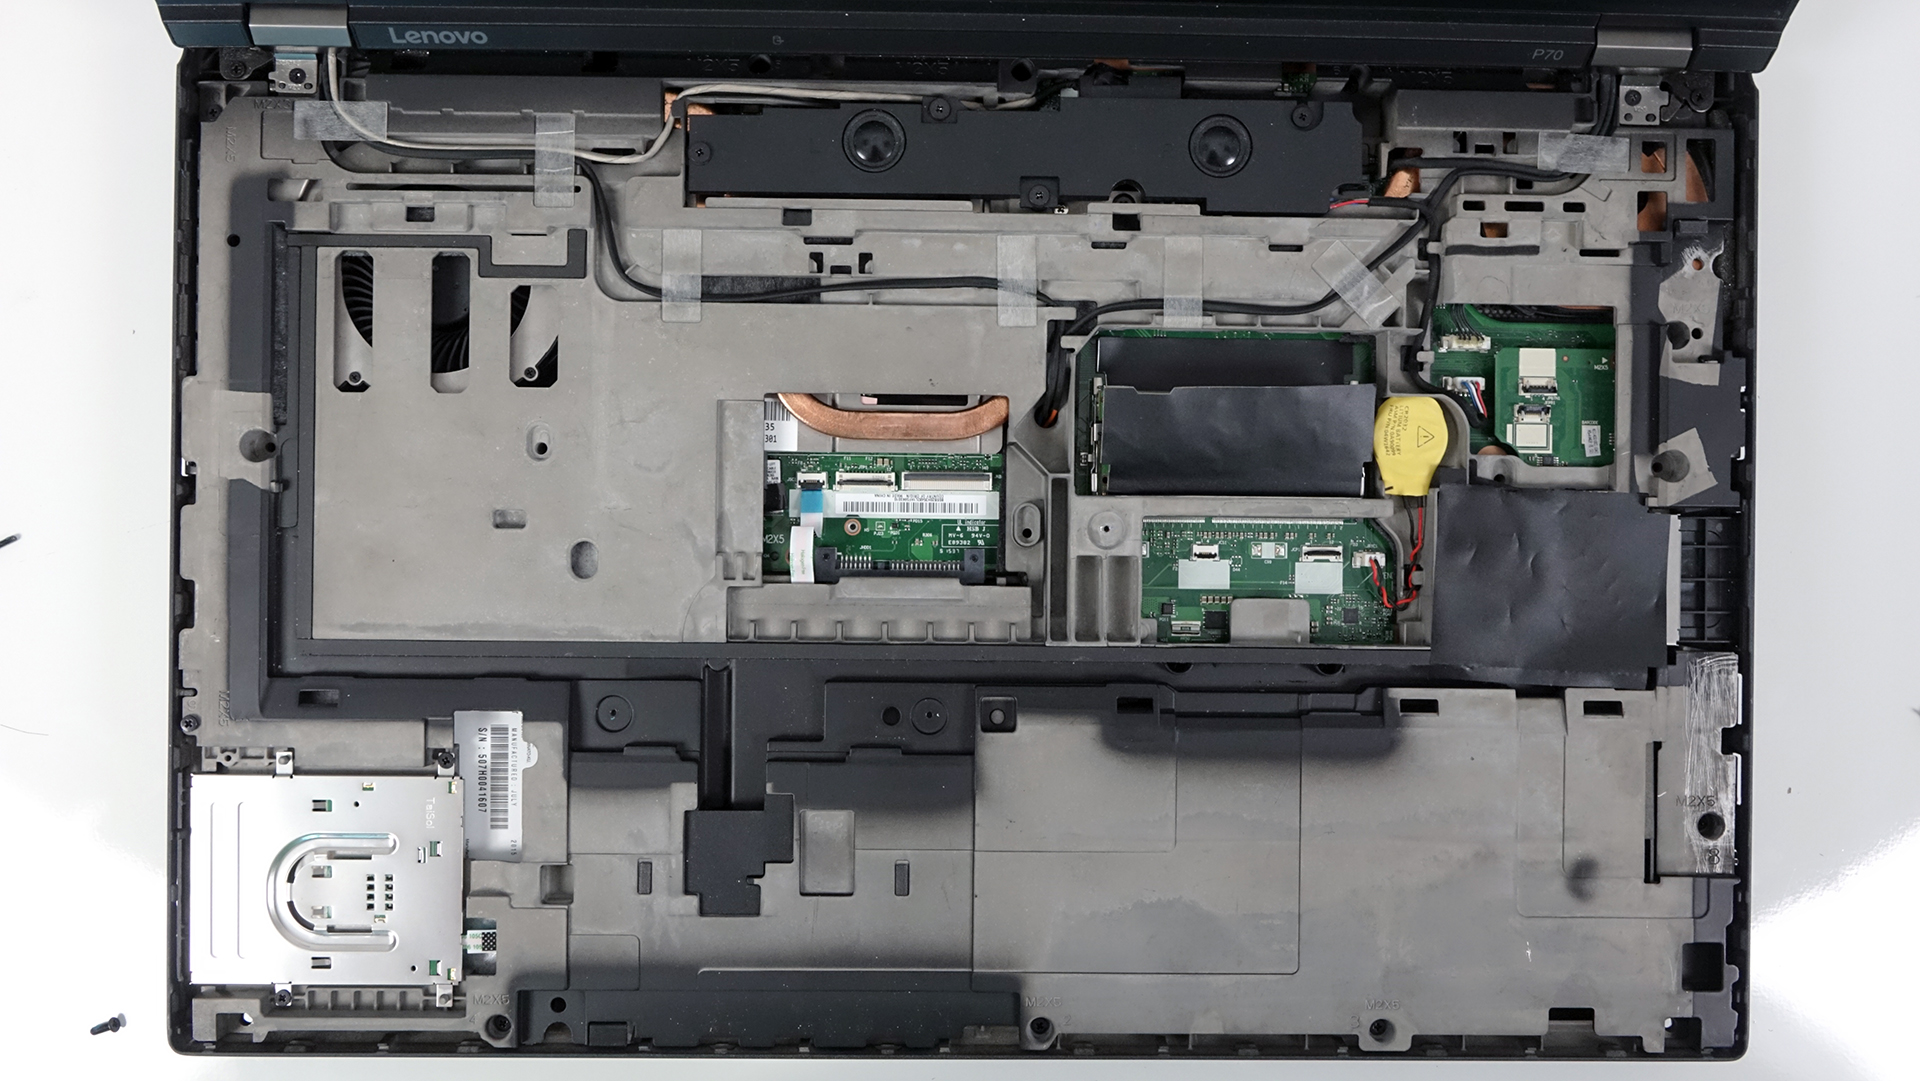 PC Lenovo ThinkPad P70 17,3 i7 Gen 6 16Go RAM 512Go SSD Linux  [Reconditionné : 599€ !] 